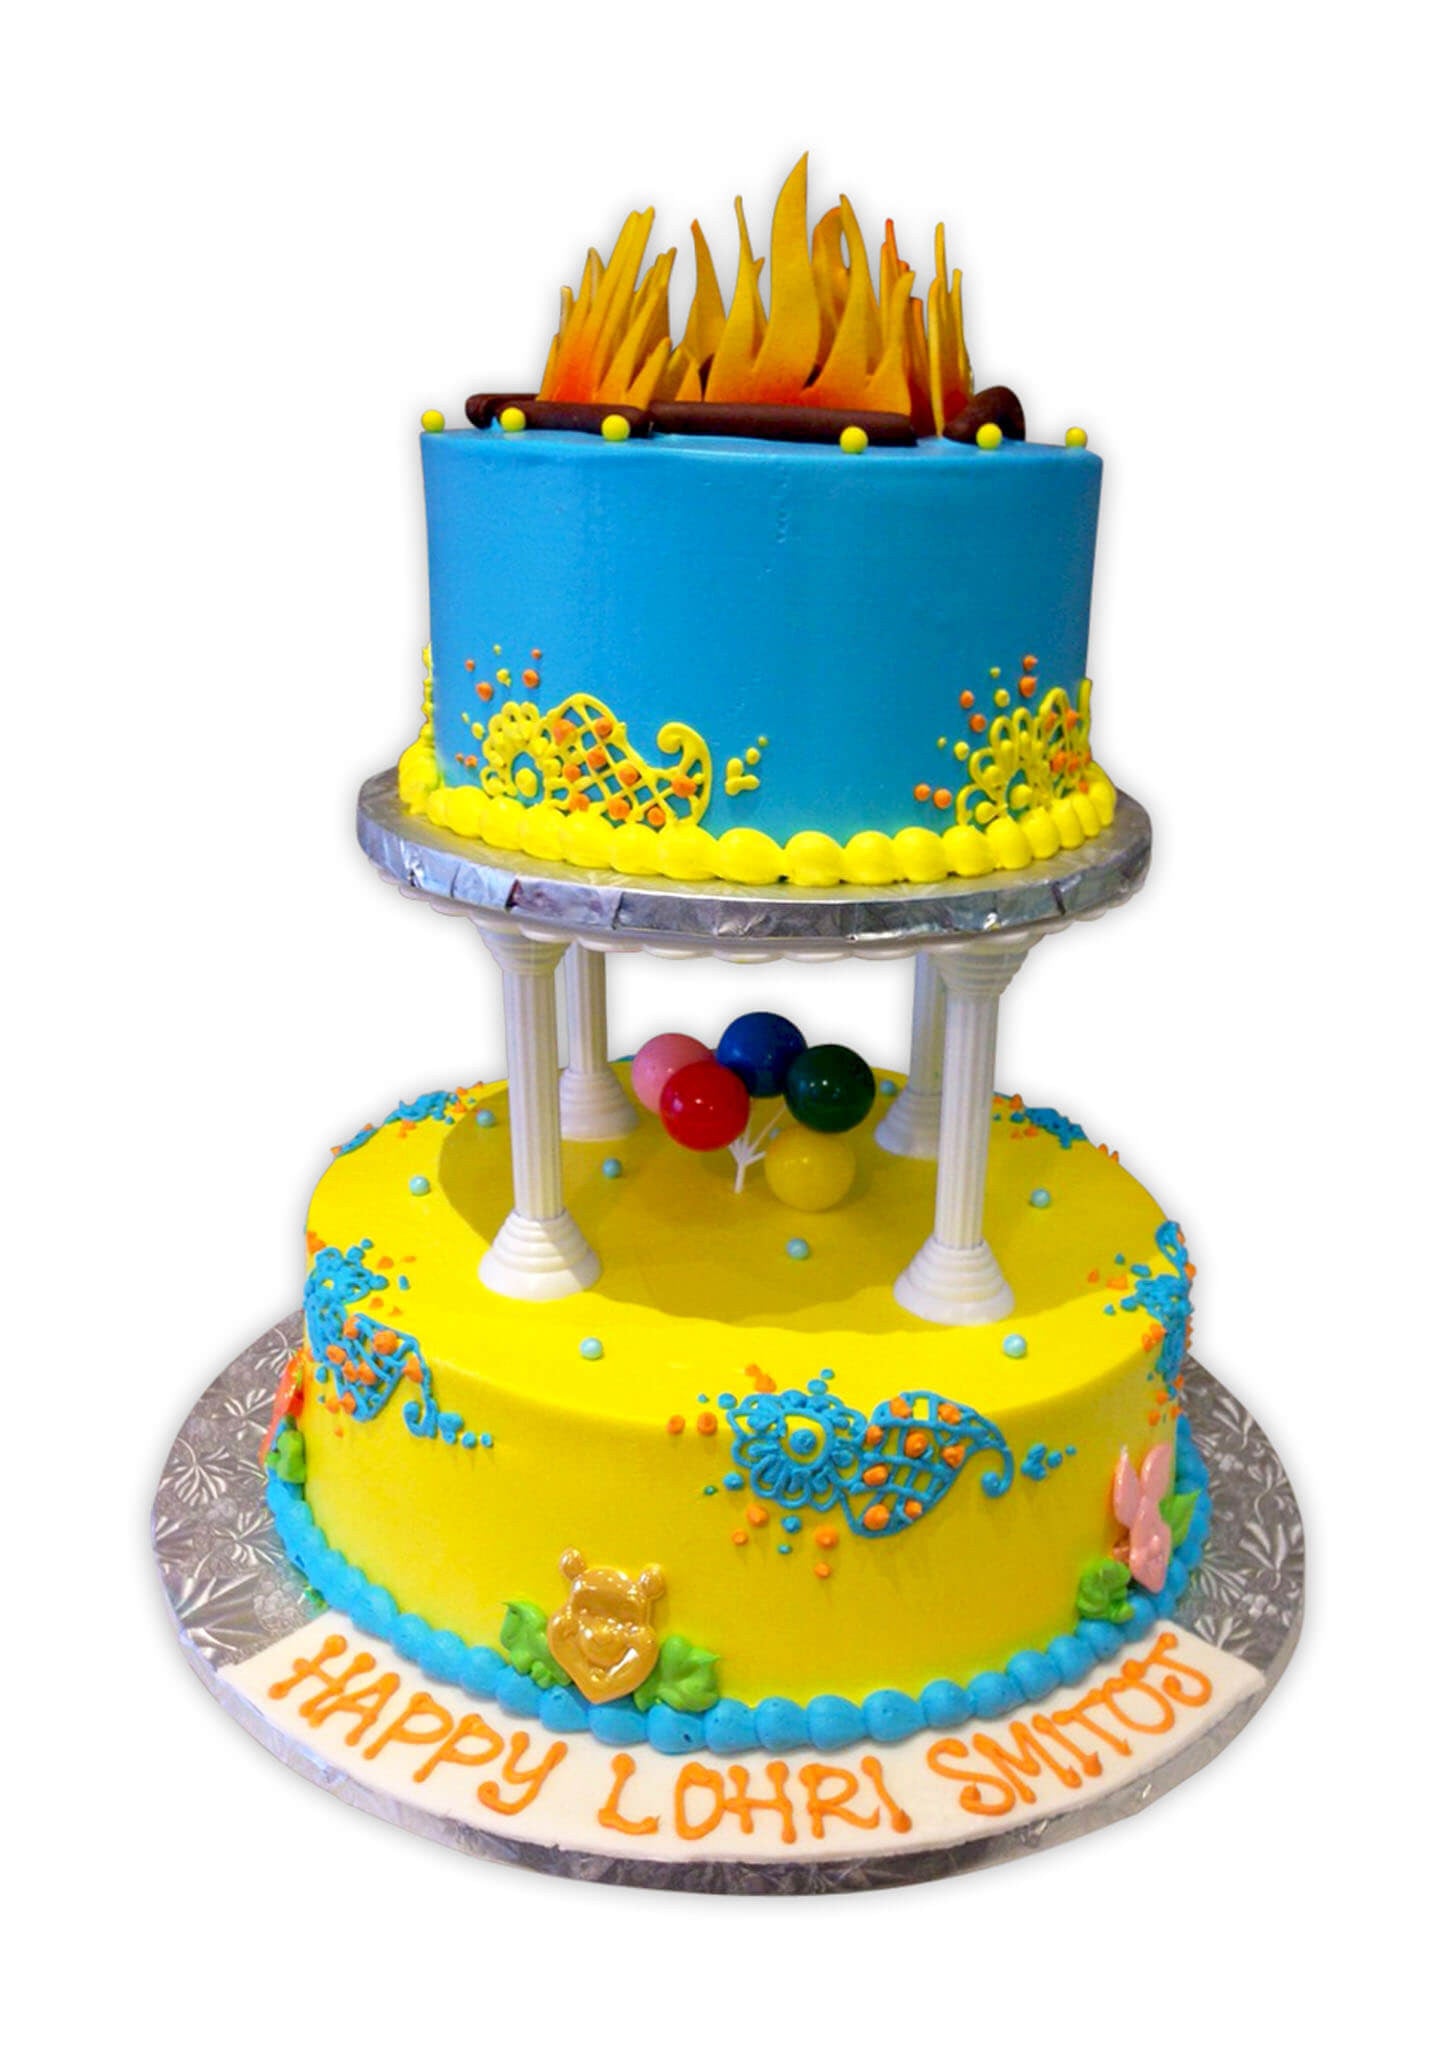 Lohri theme cake in 2023 | Themed cakes, Cake